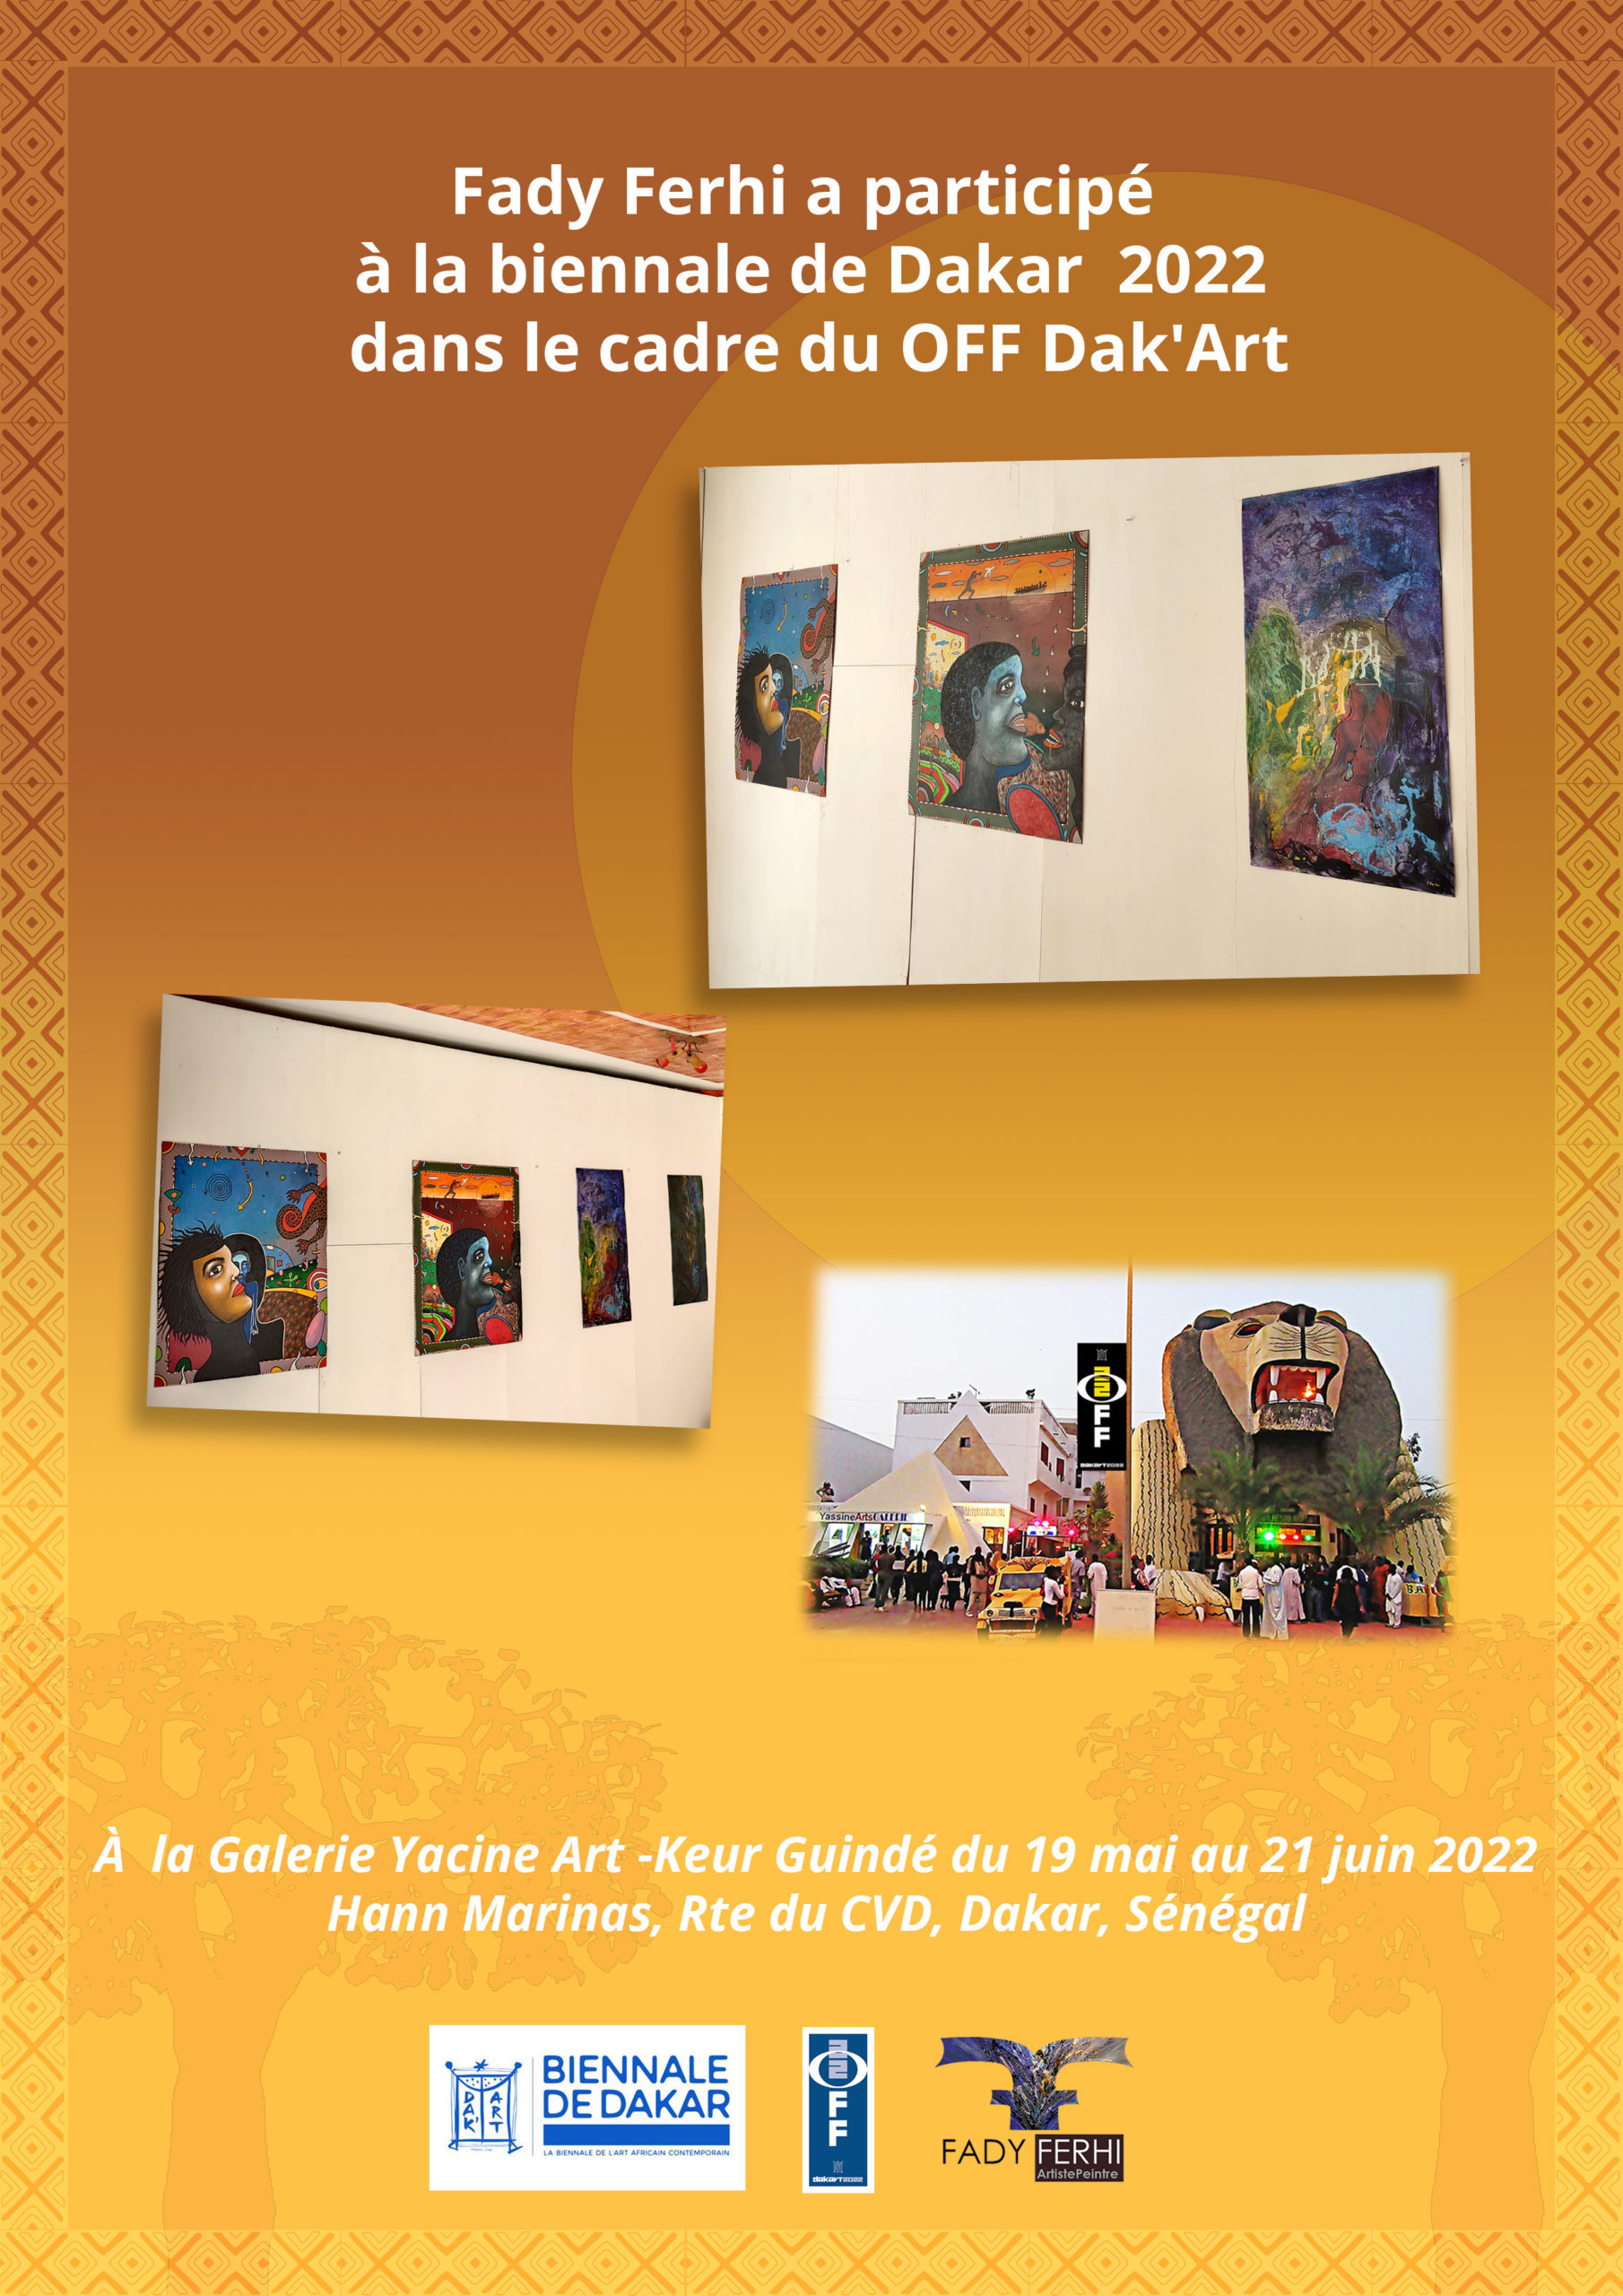 Dak'Art OFF of the Dakar Biennale 2022-during The Biennale de l'Art Africain Contemporain - FADY FERHI expose at YASSINE ARTS GALLERY